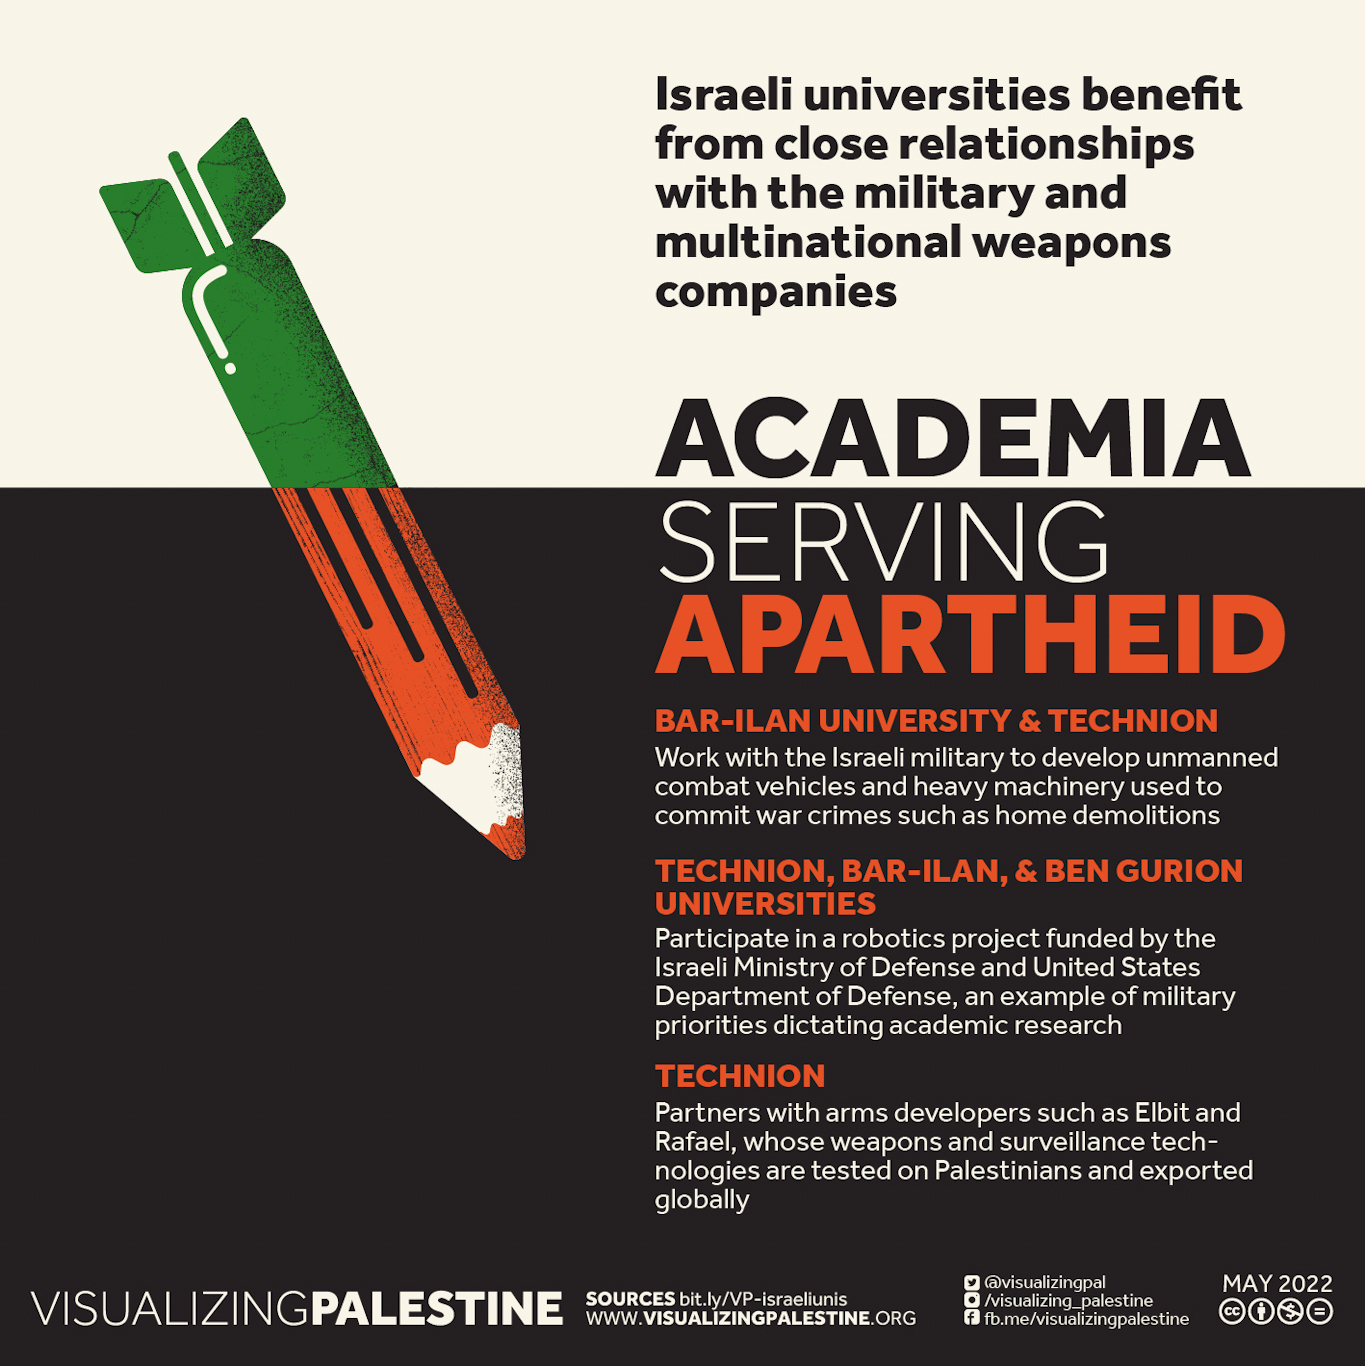 Israeli academic Aparthied